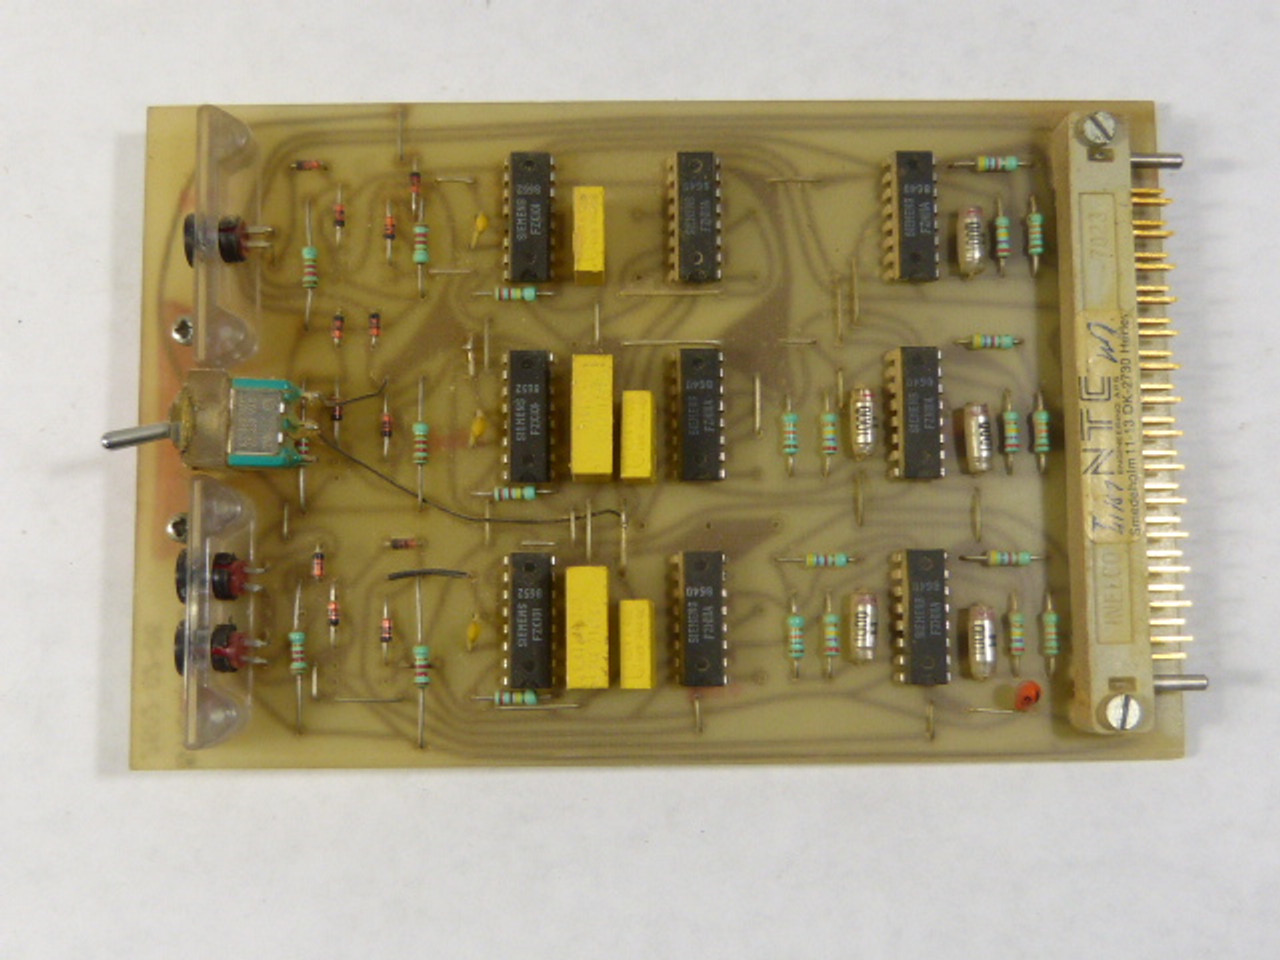 Stickma 2602-02-06 Memory Board W/ Toggle Switch USED